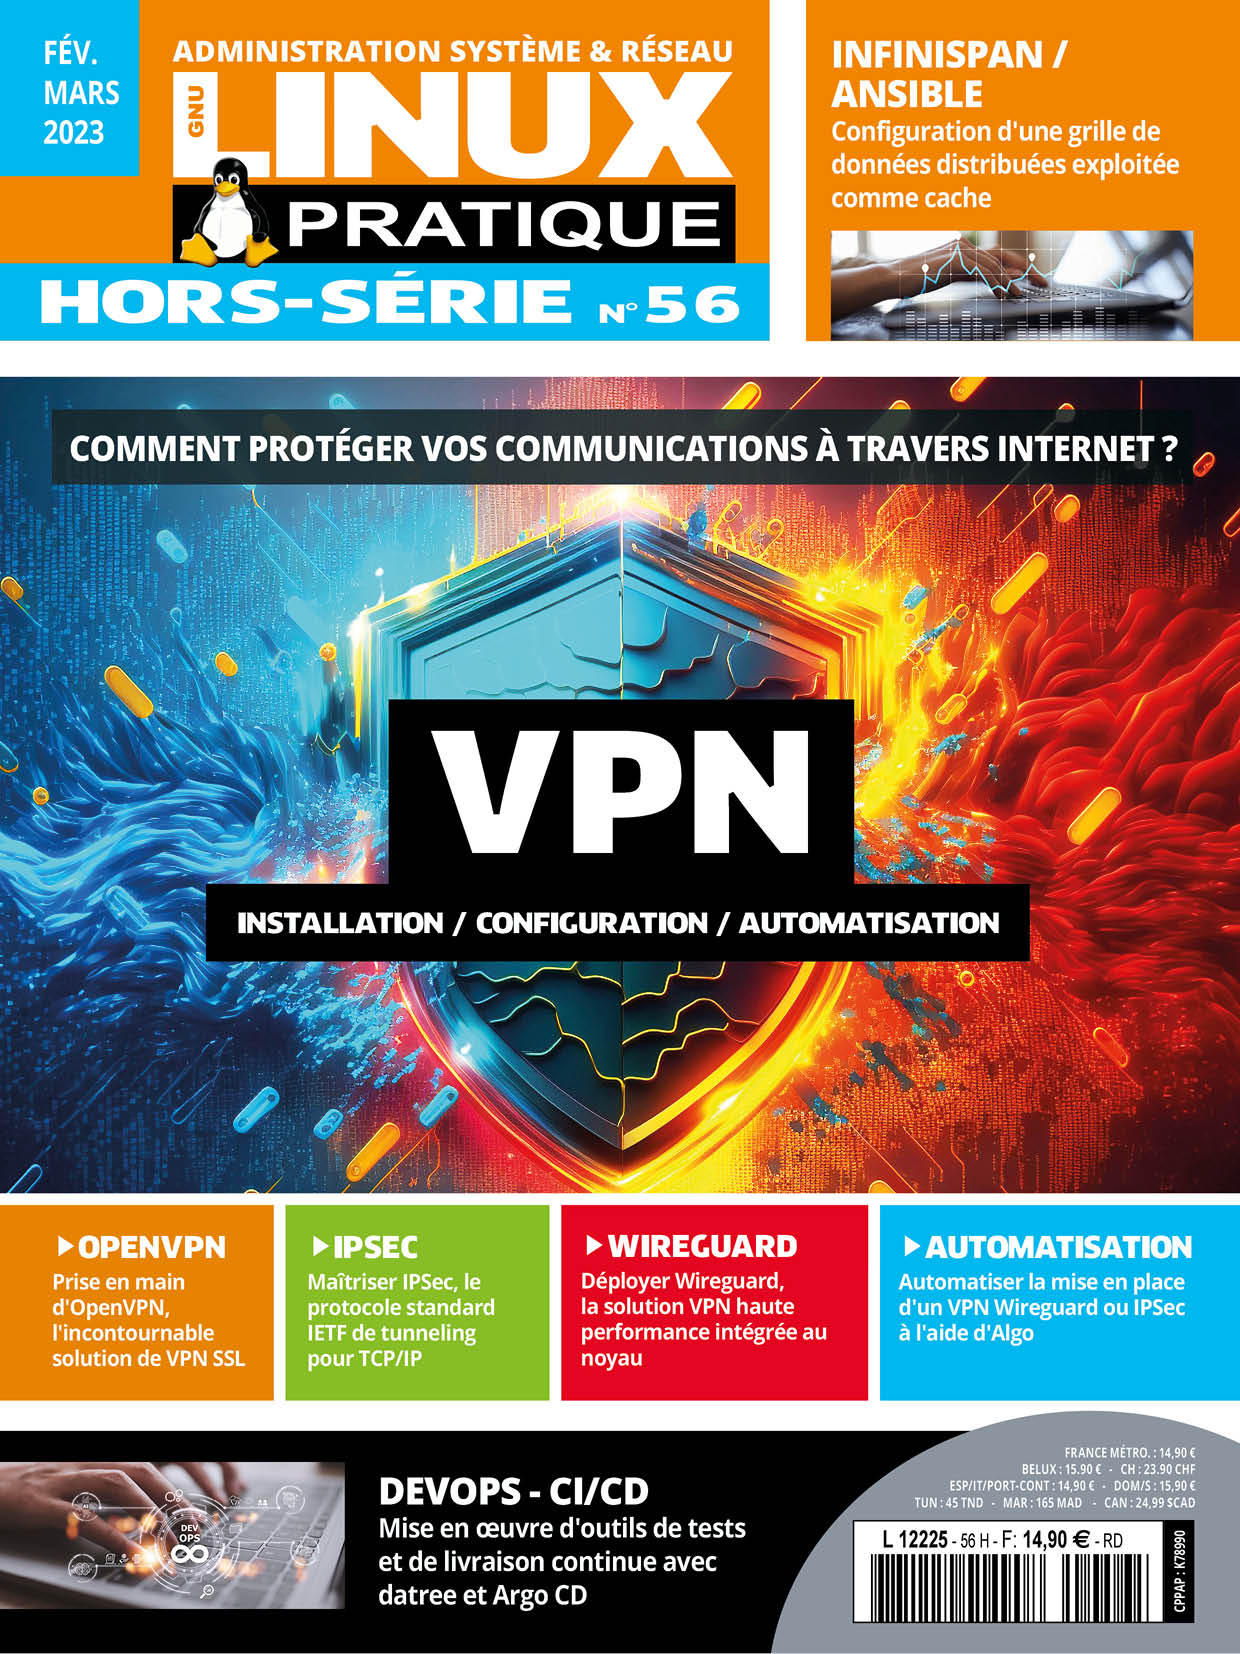 VPN - Installation / Configuration / Automatisation